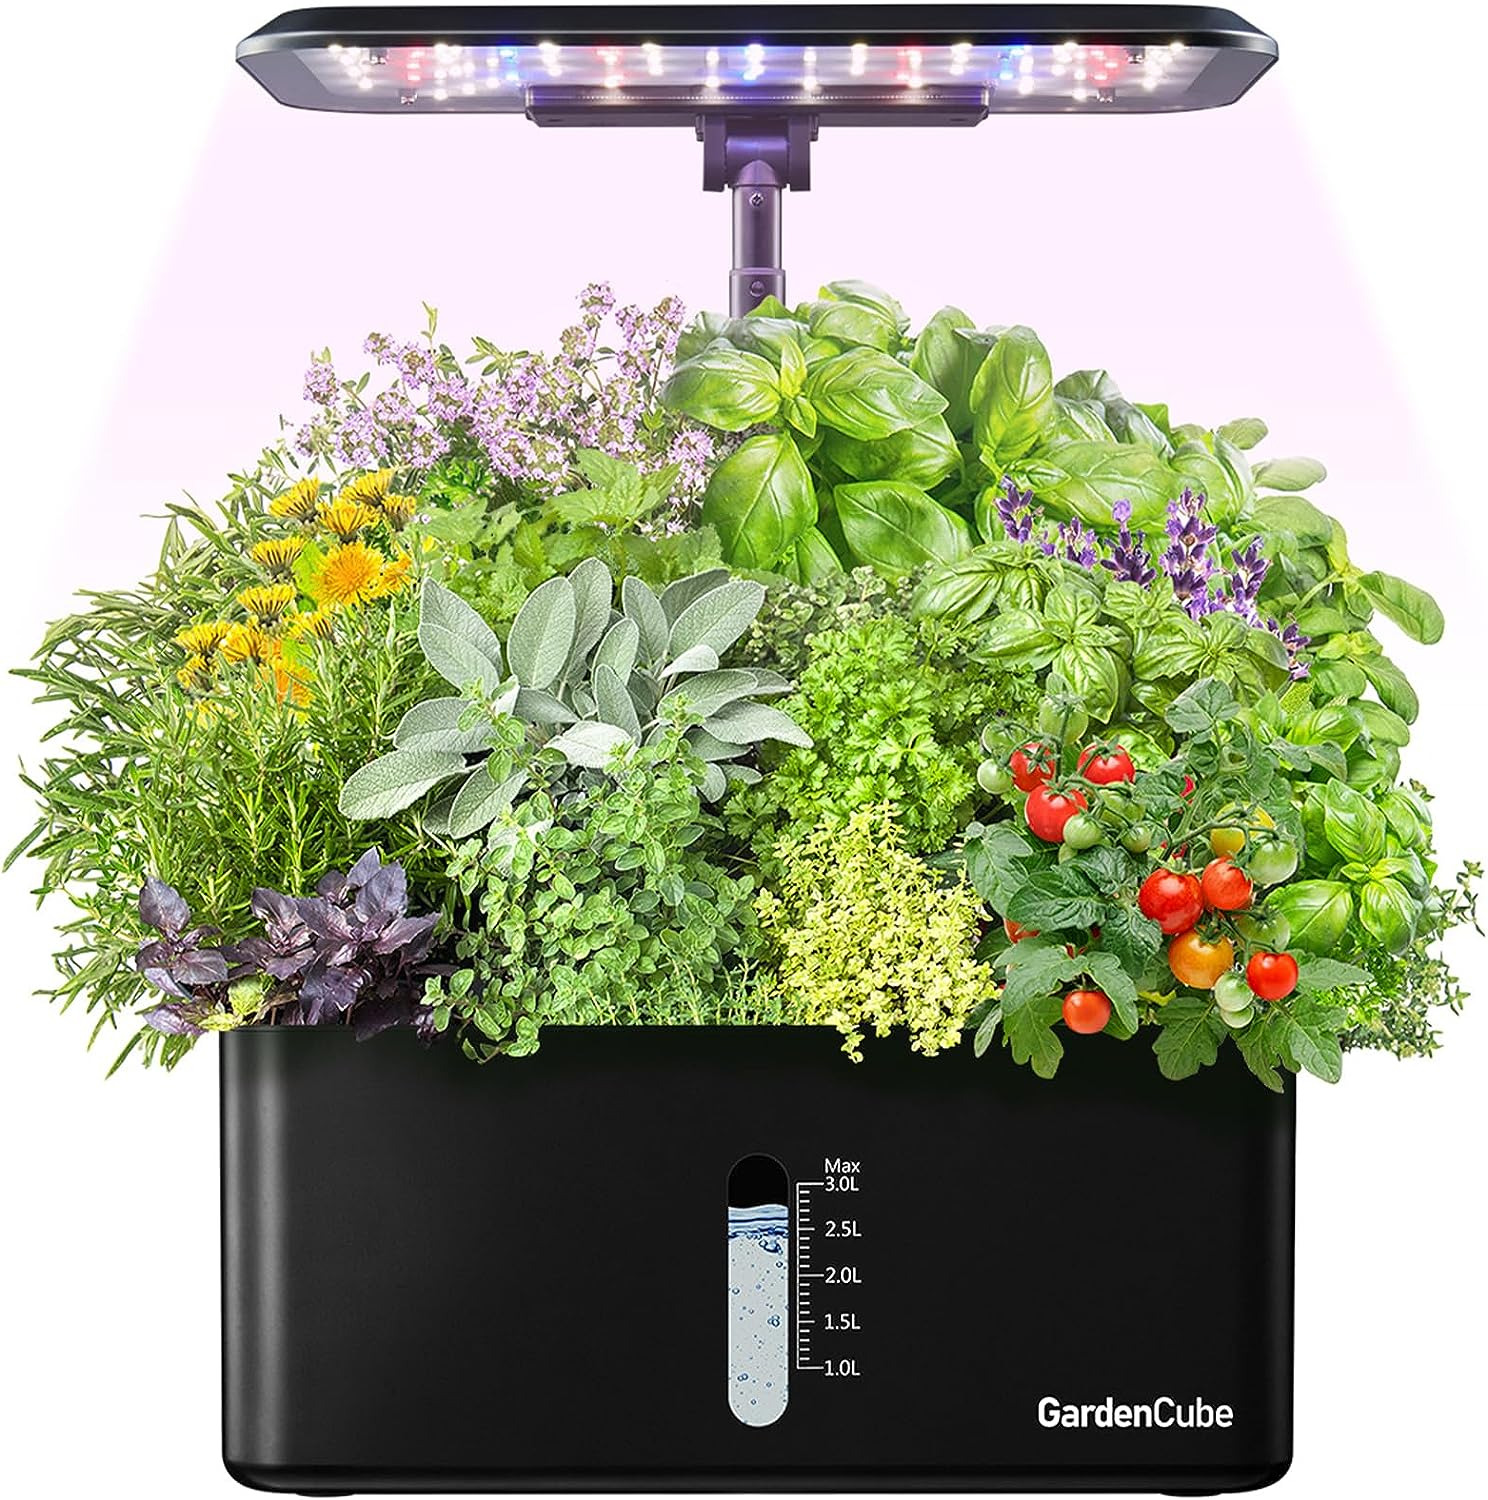 Hydroponics Growing System Indoor Garden: Herb Garden Kit Indoor with LED Grow L